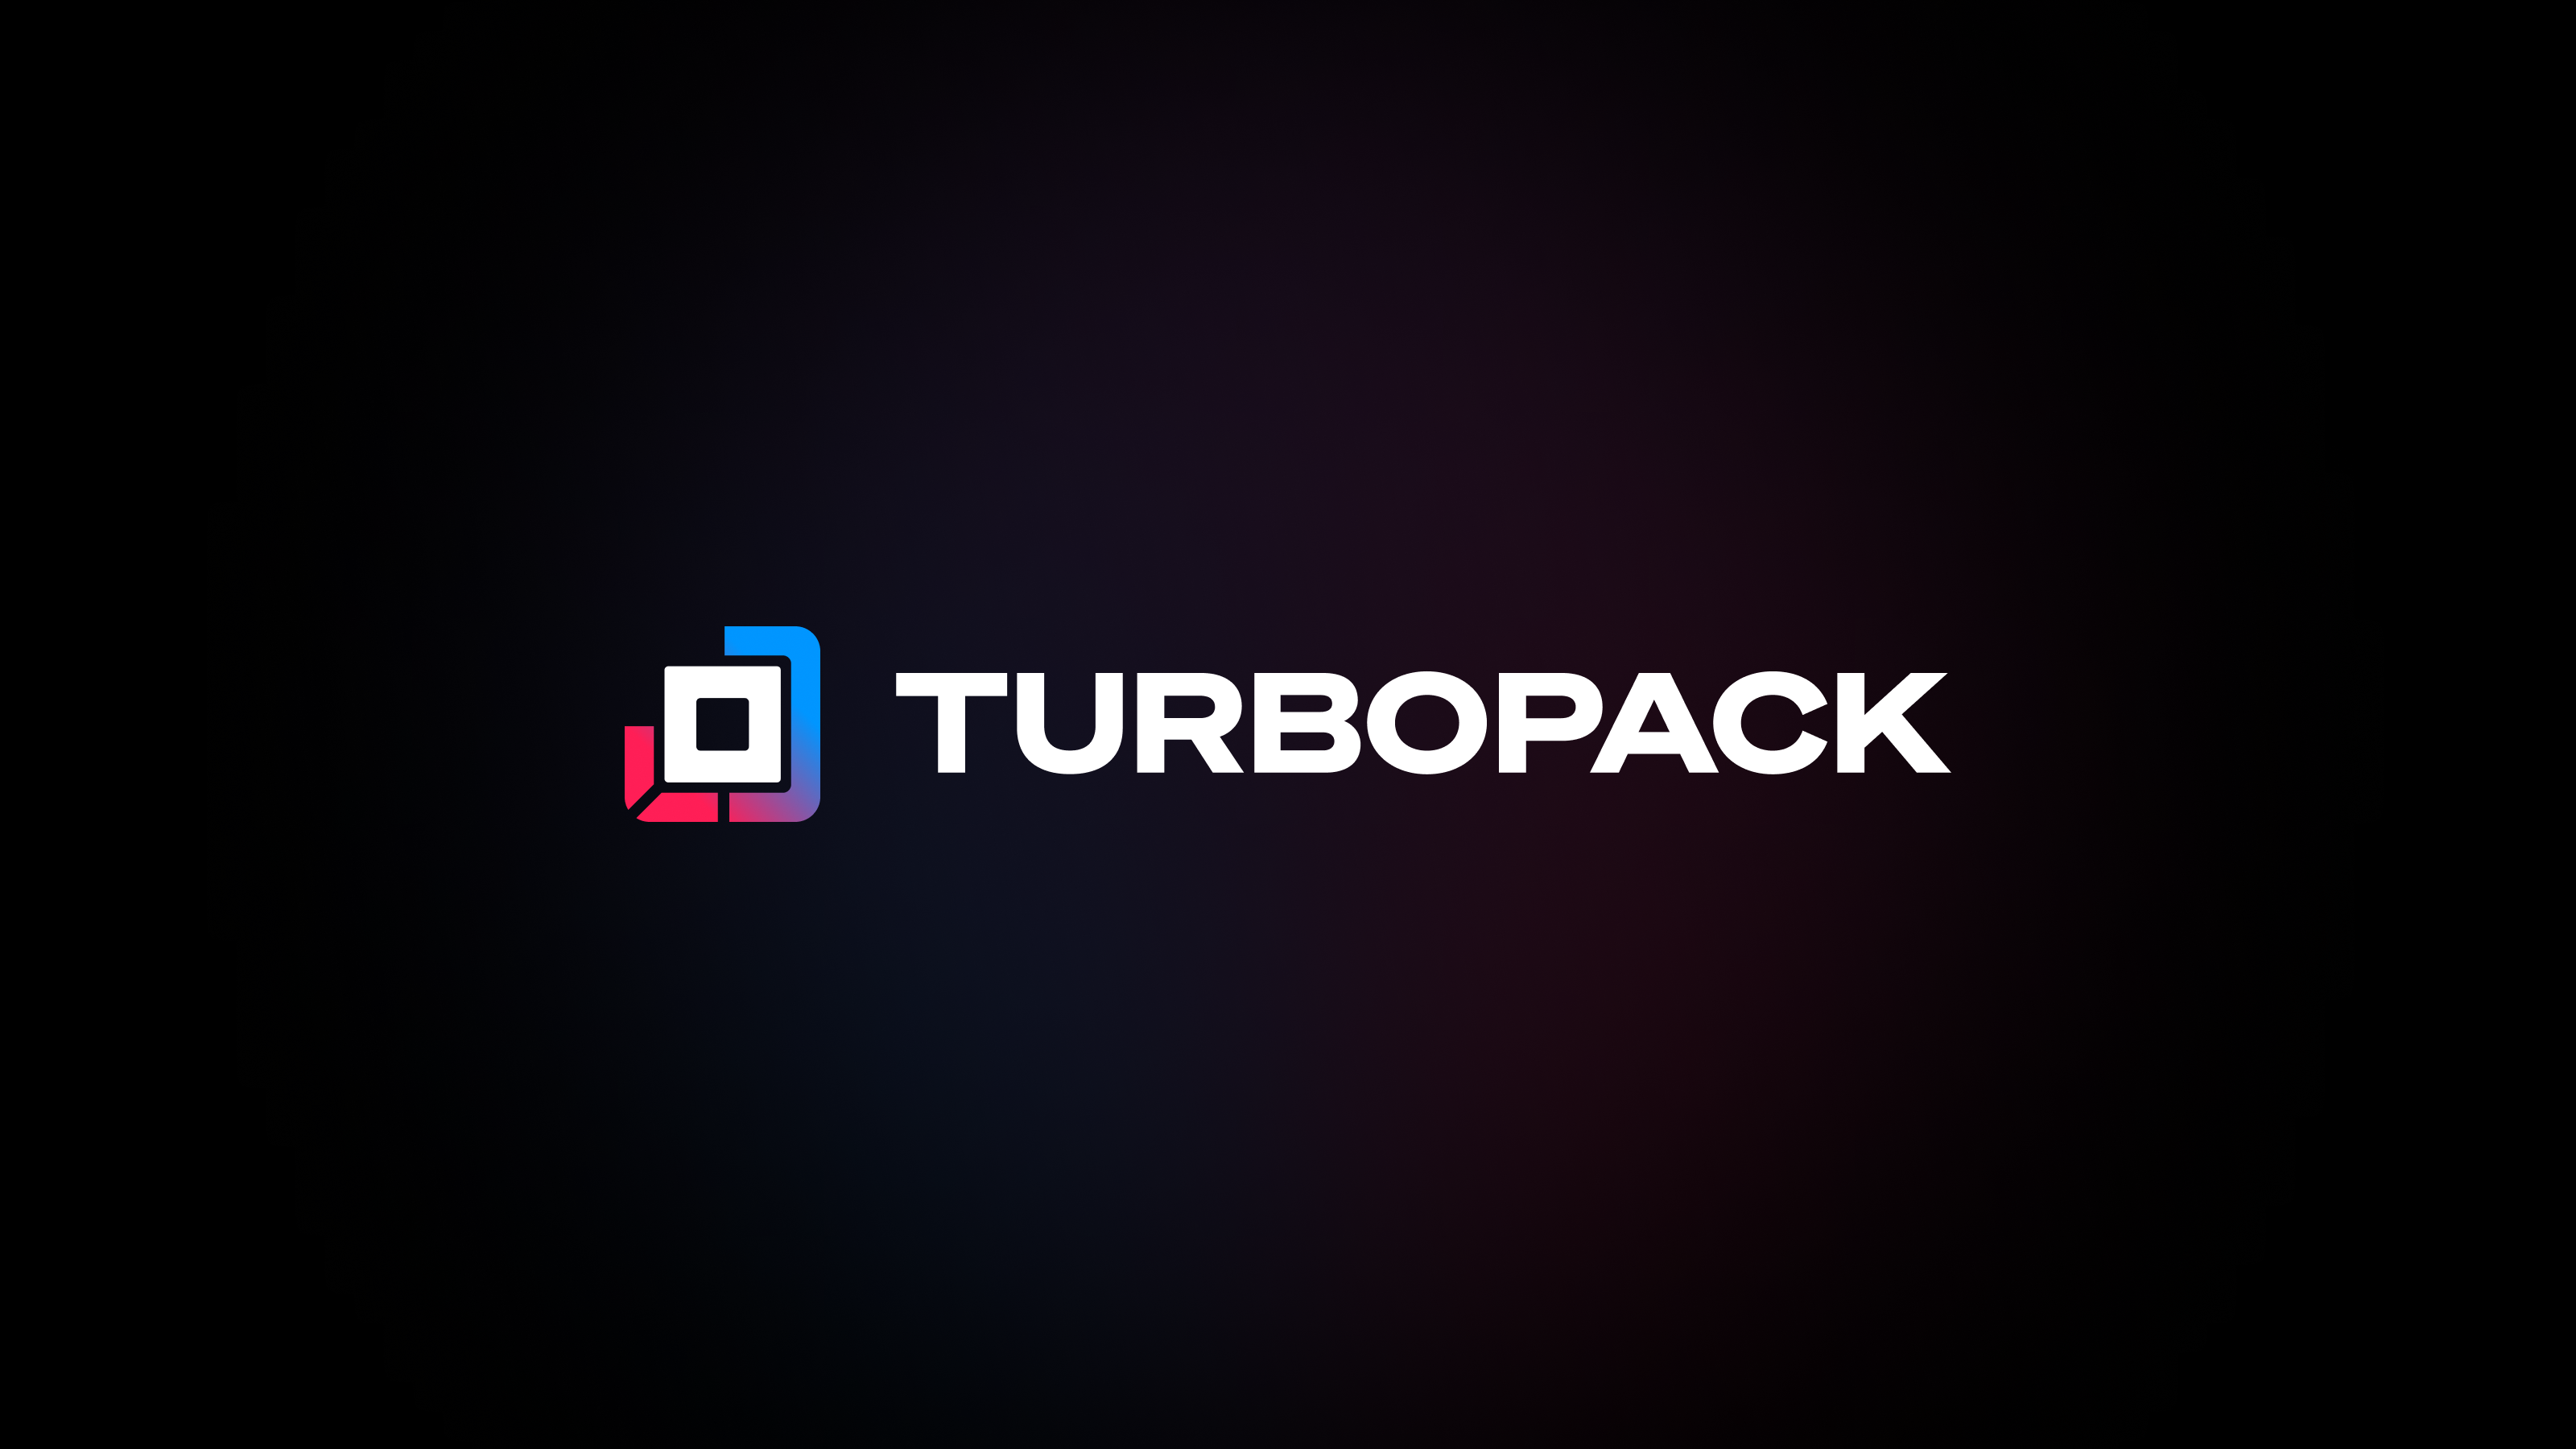 Introducing Turbopack, the Rust-based successor to Webpack.